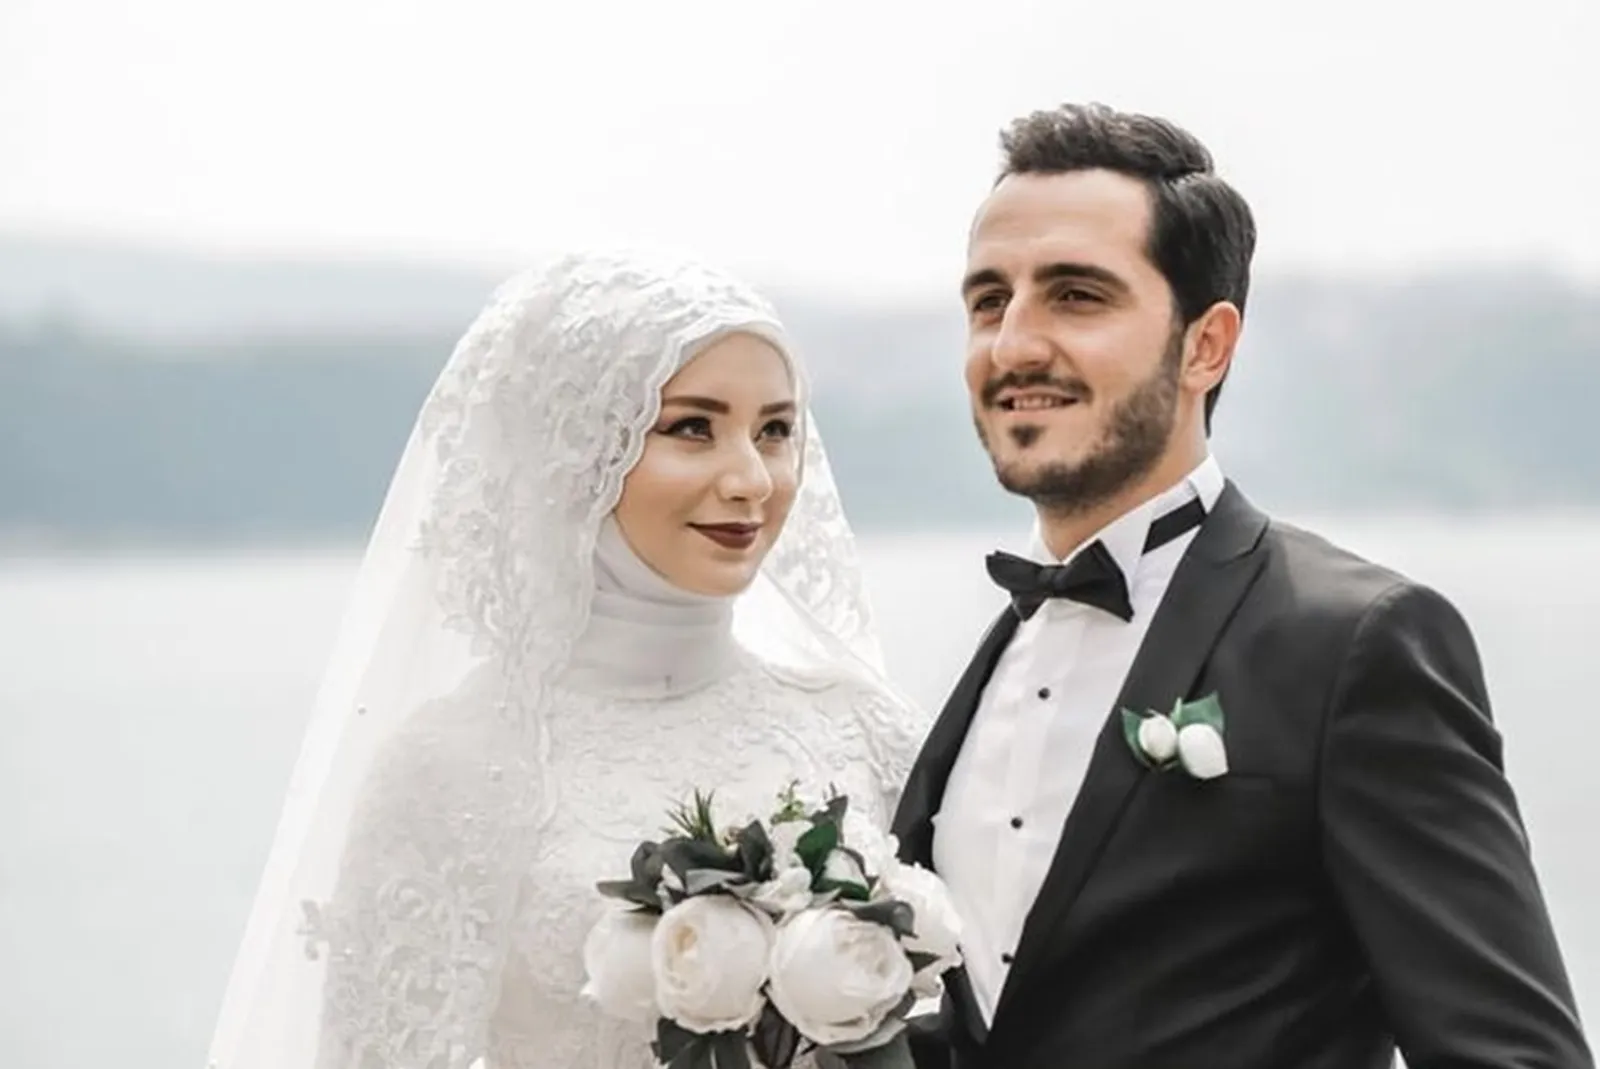 Nggak Nyangka! Inilah 5 Fakta Unik Menikah di Bulan Ramadan